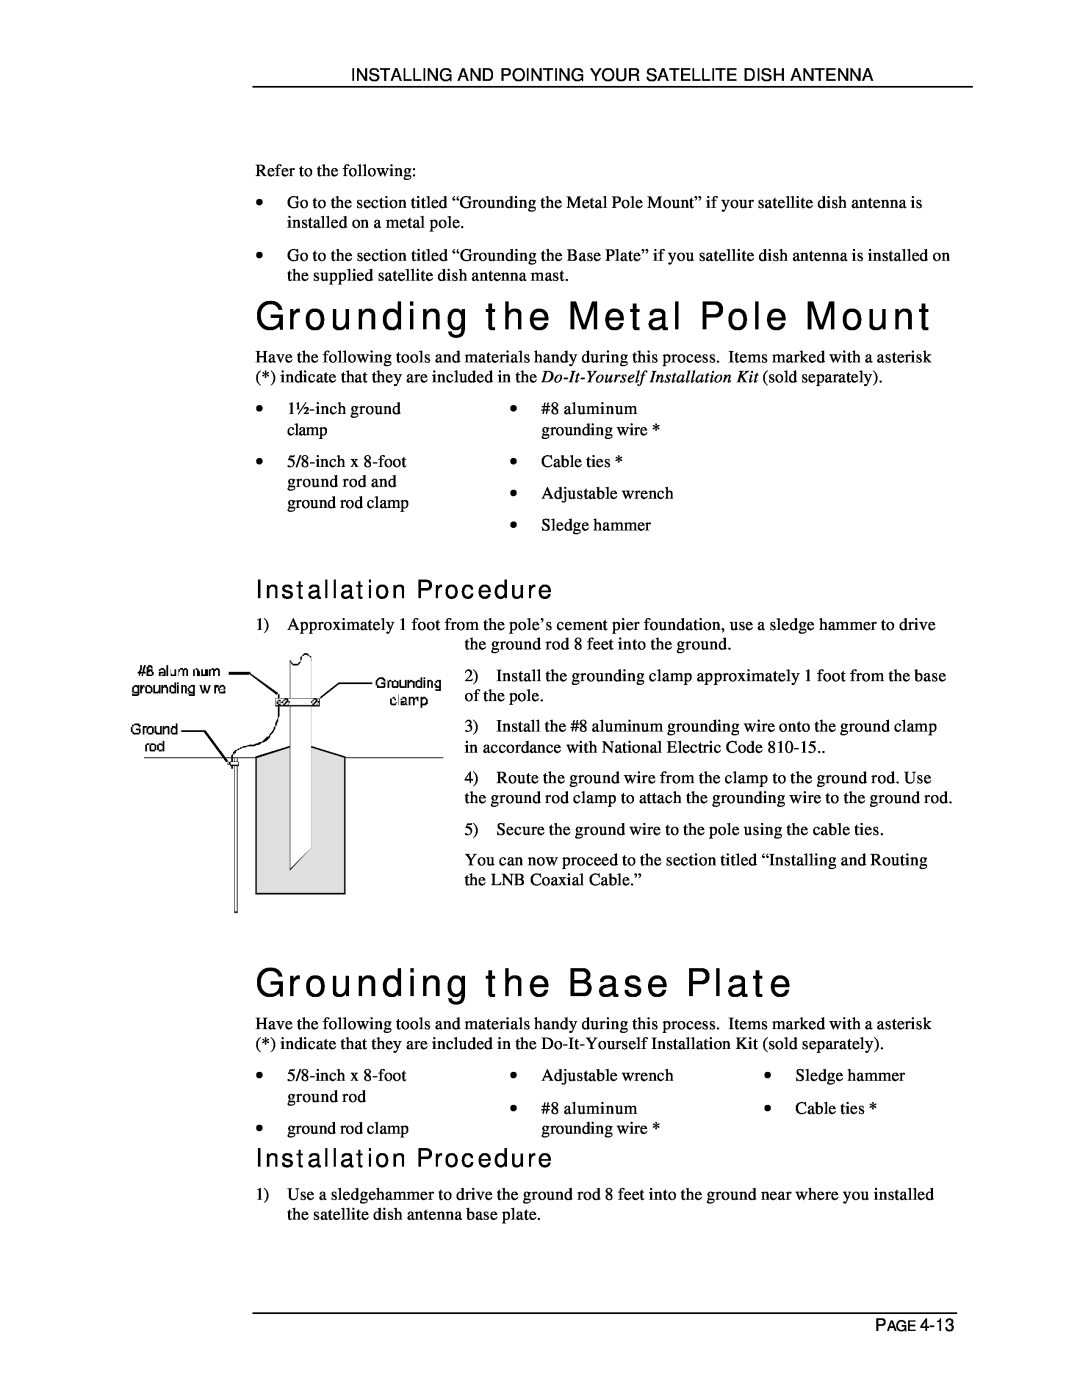 DirecTV HIRD-E11, HIRD-E25 owner manual Grounding the Metal Pole Mount, Grounding the Base Plate, Installation Procedure 